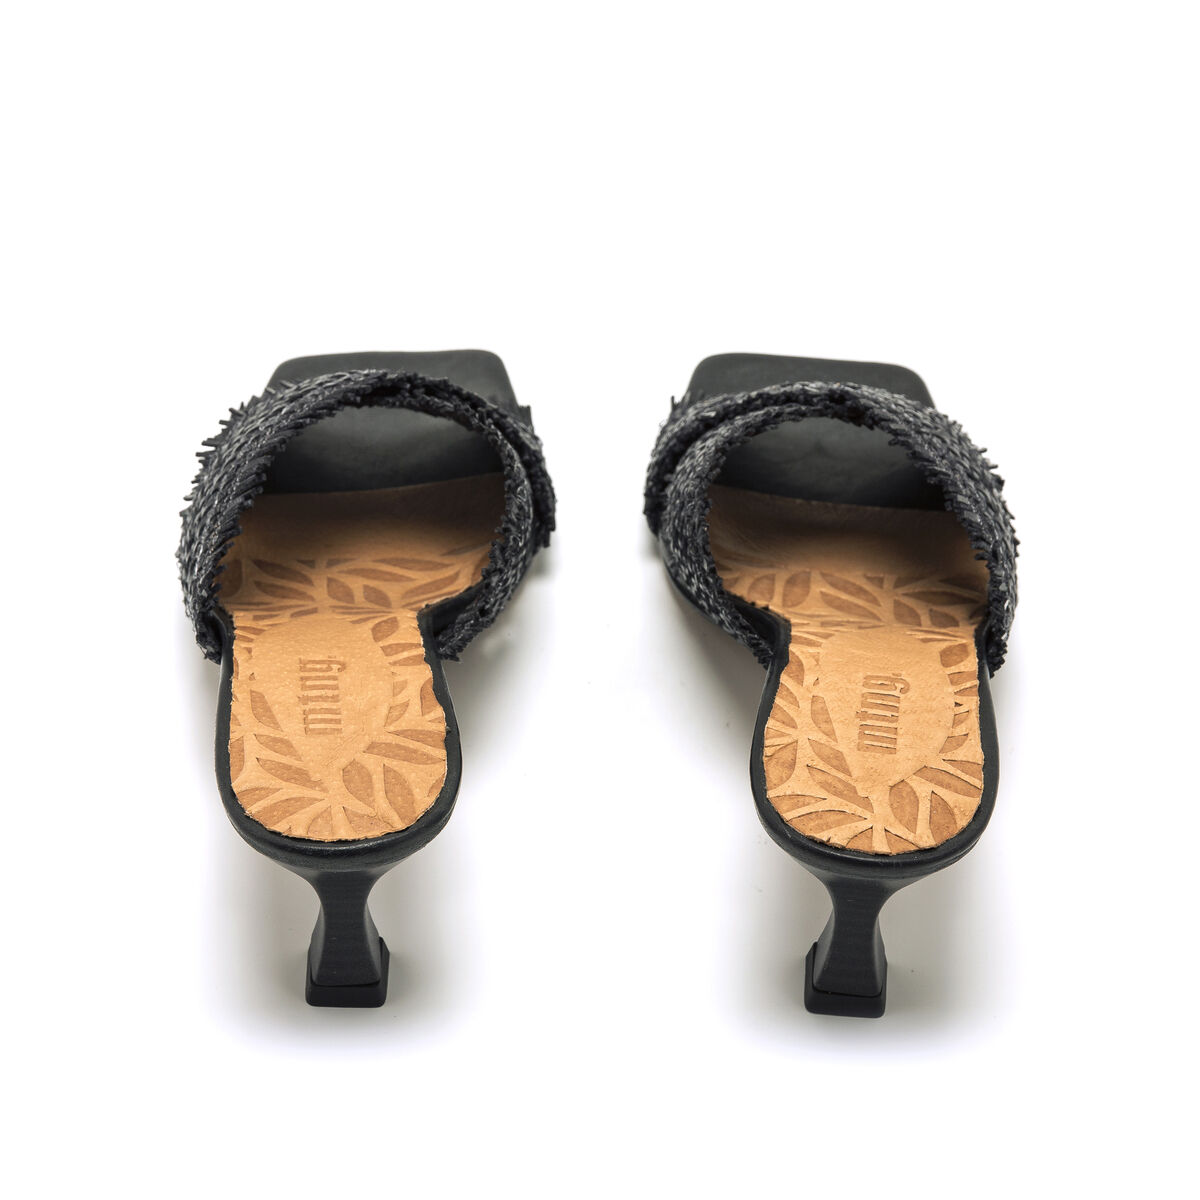 Sandalias de tacon de Mujer modelo ANNIE de MTNG image number 4